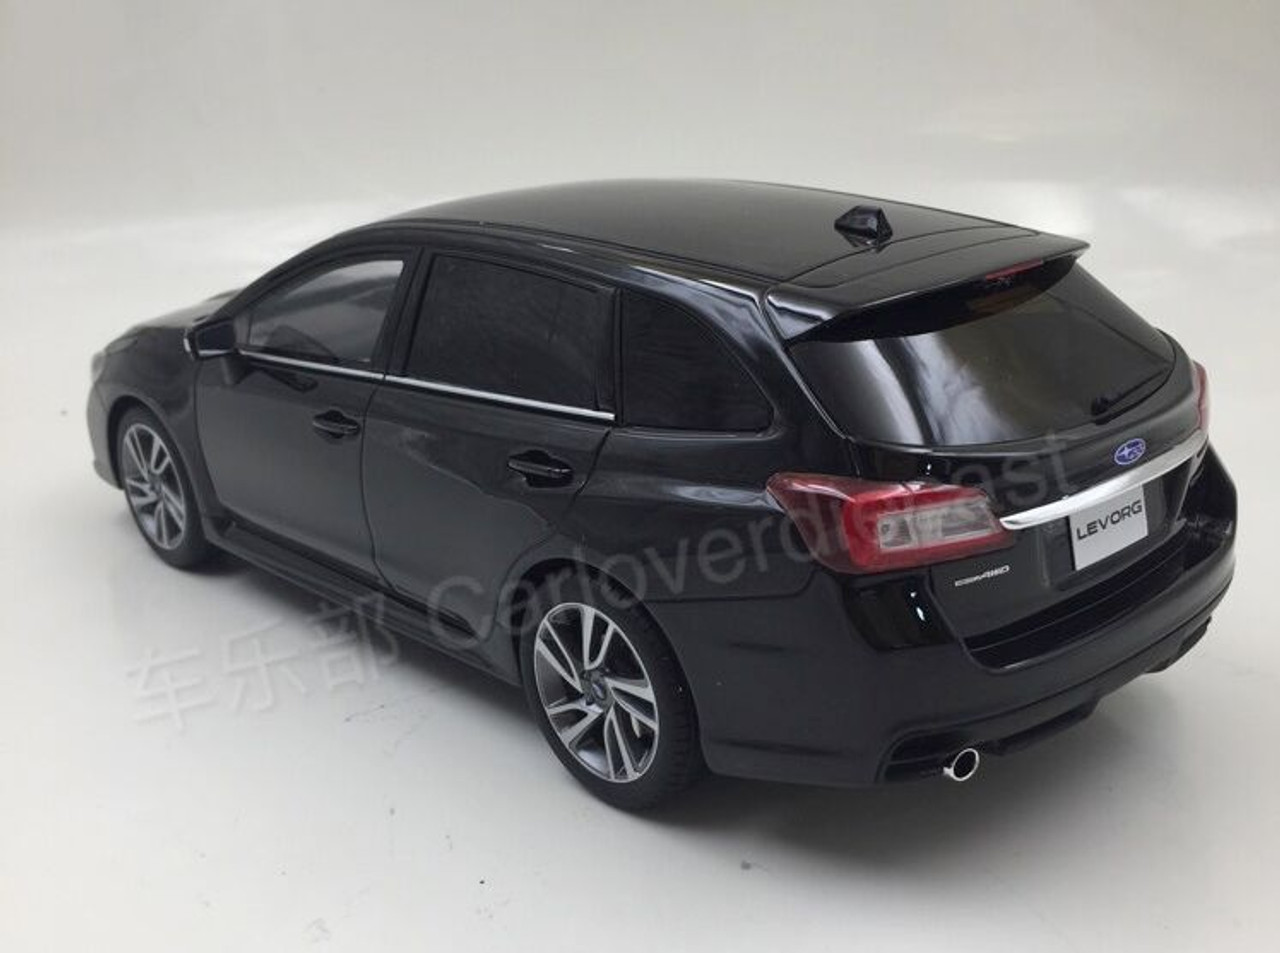 1/18 Kyosho Subaru Levorg 1.6 GT-S GTS (Black) Car Model